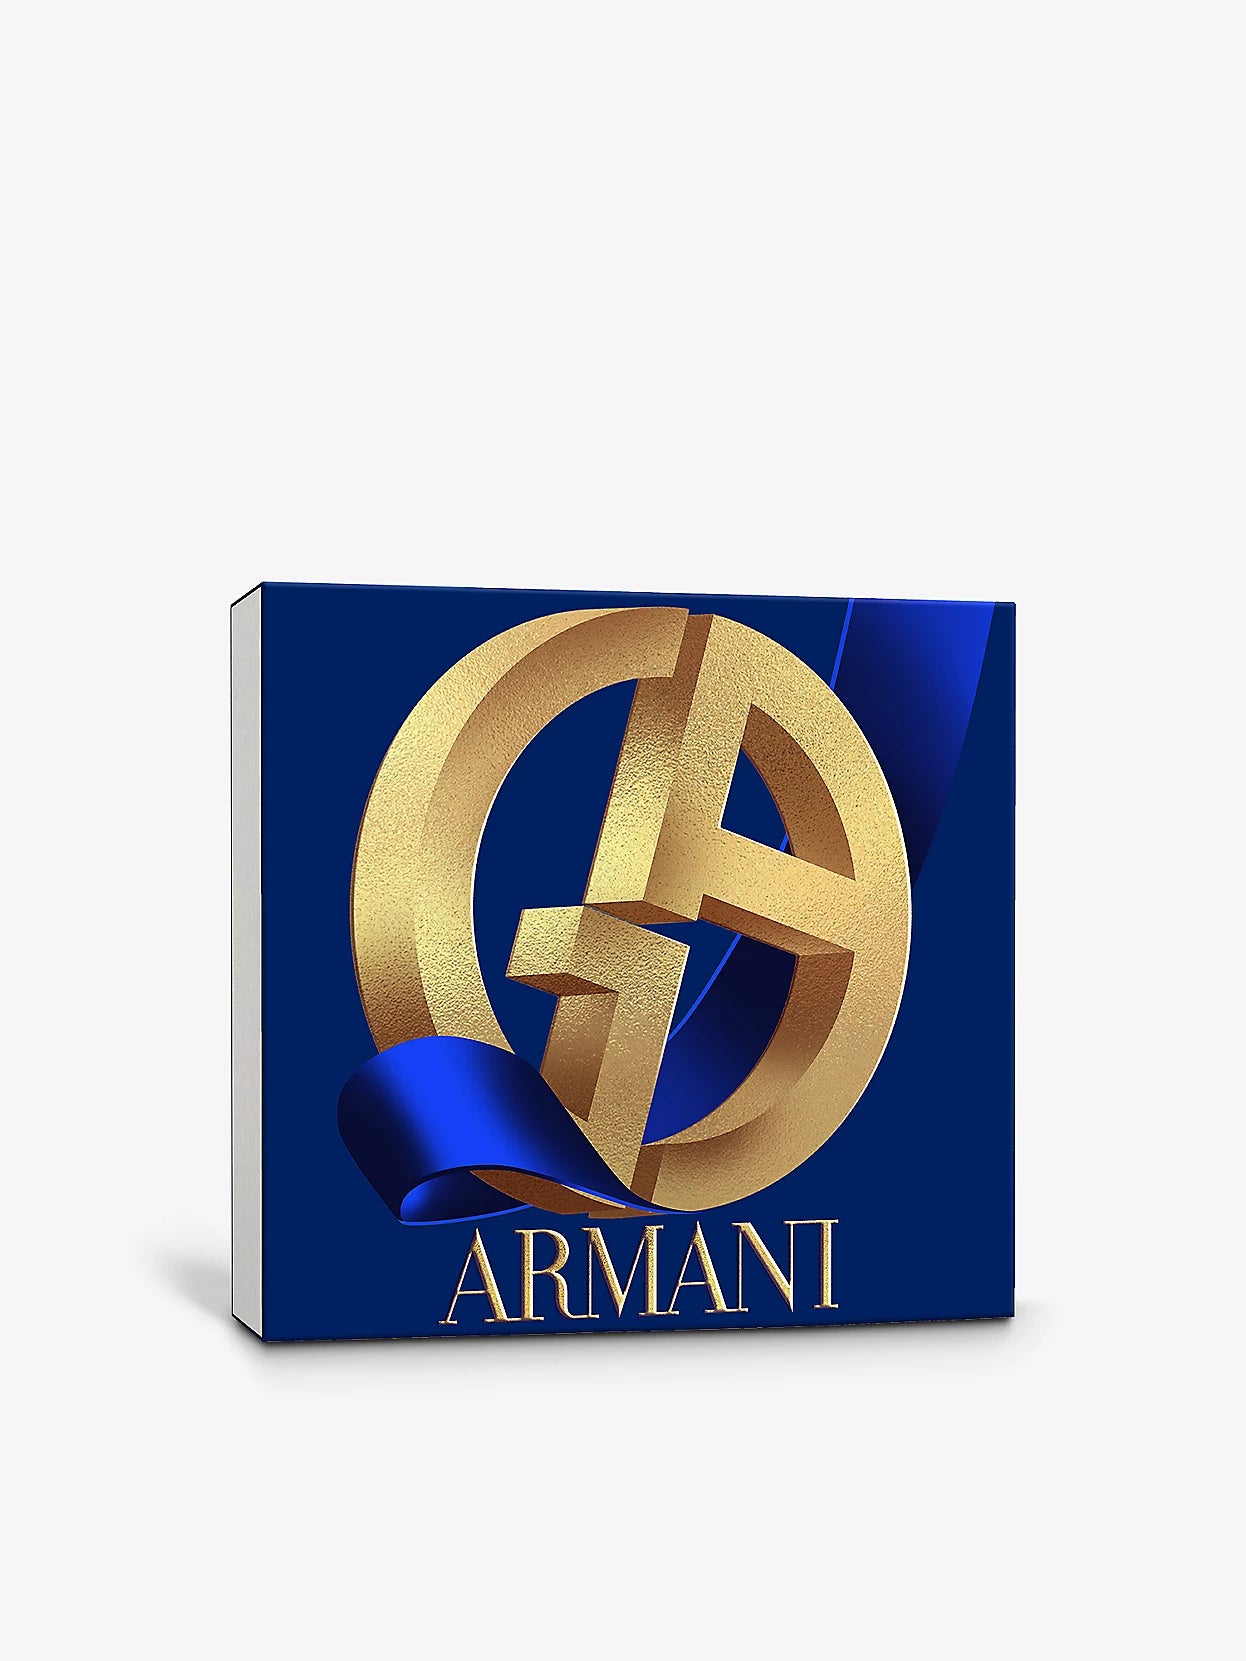 Giorgio Armani Beauty Code Homme Eau de Toilette Gift Set (Limited Edition)